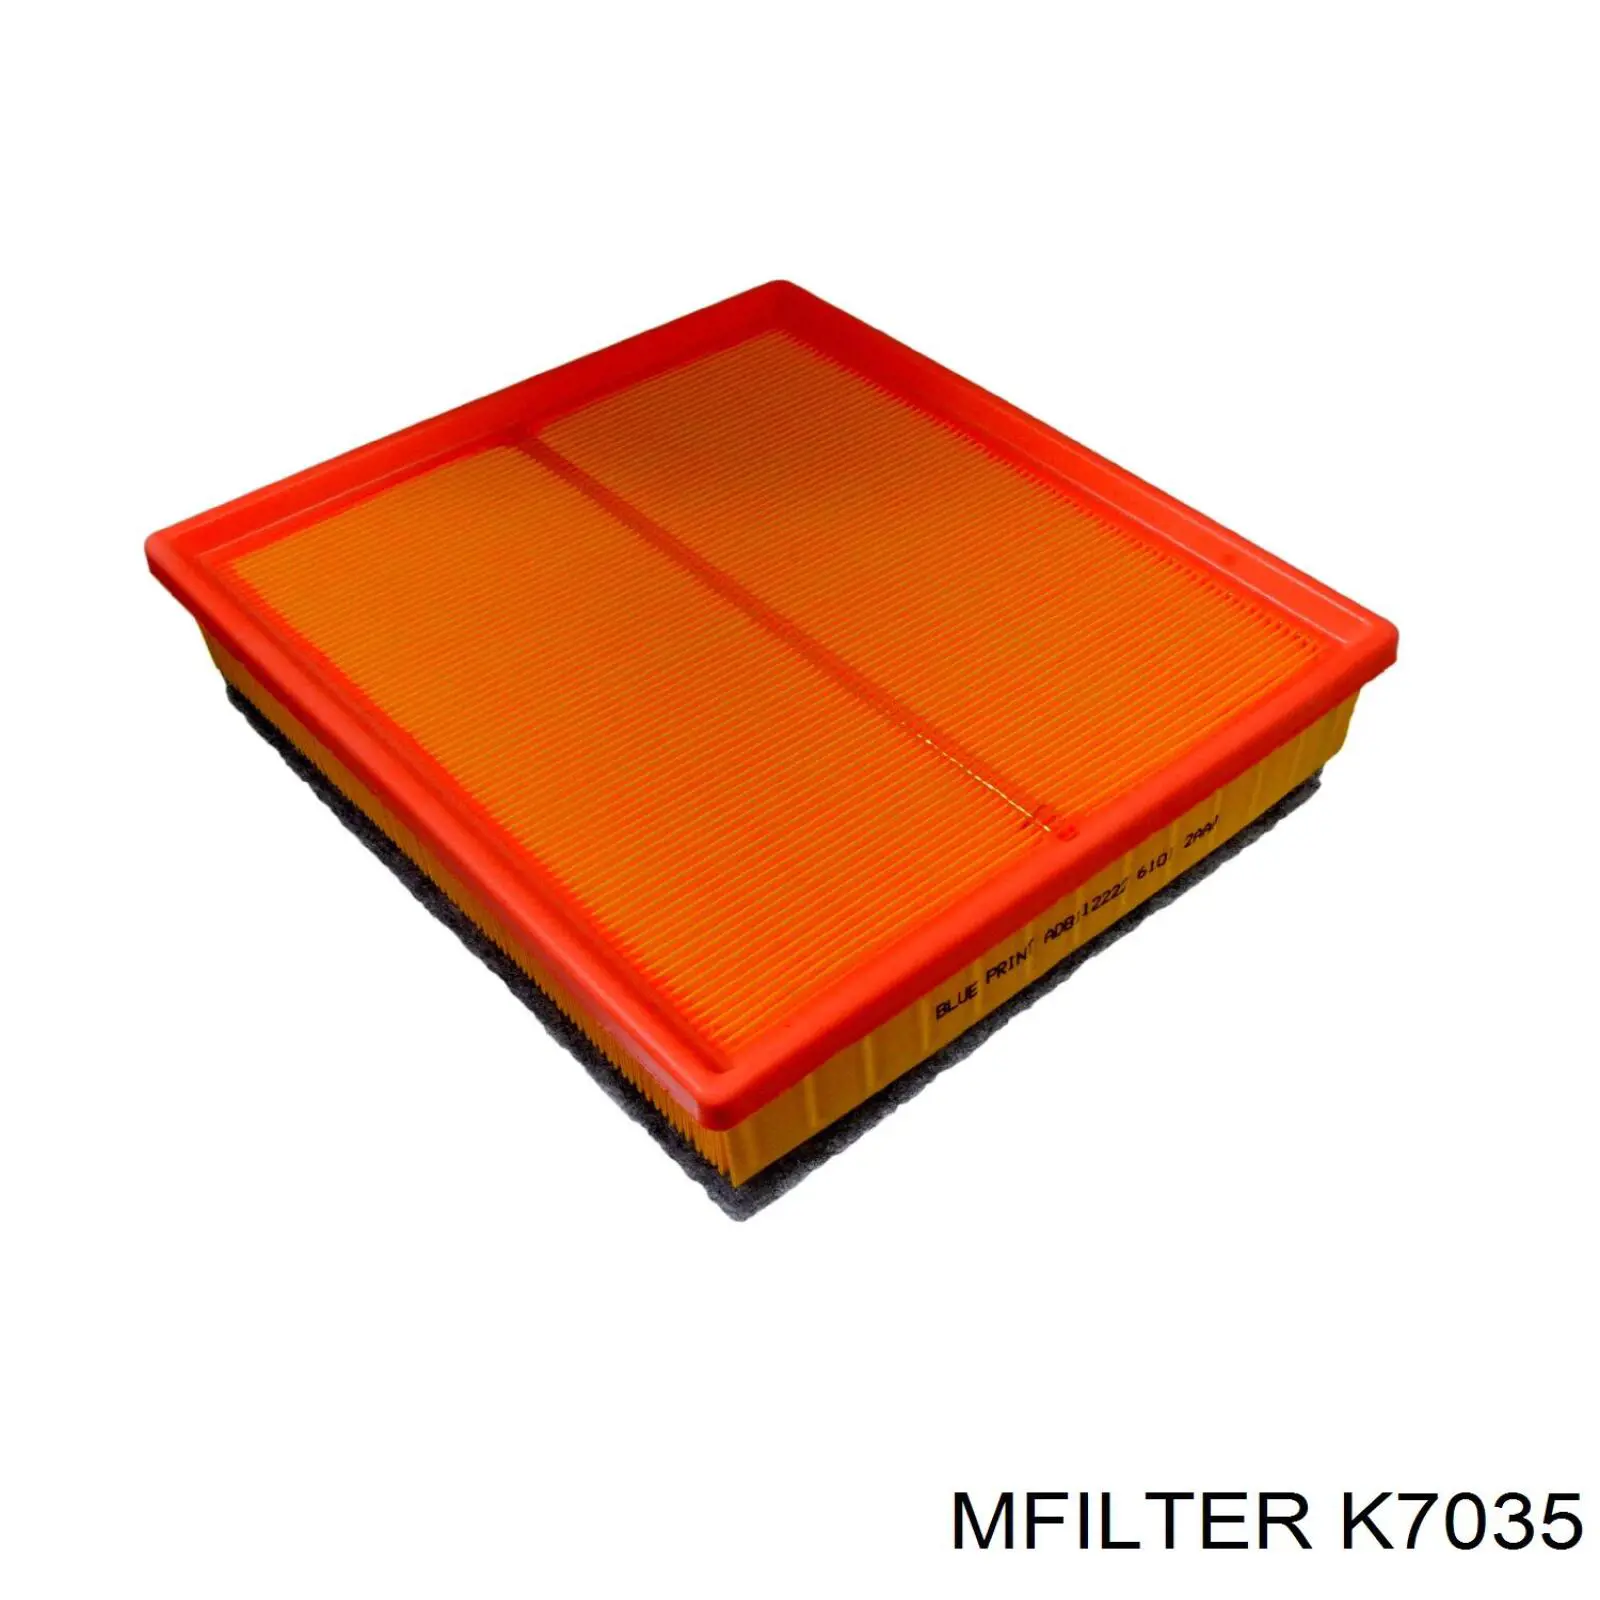 K7035 Mfilter filtro de aire